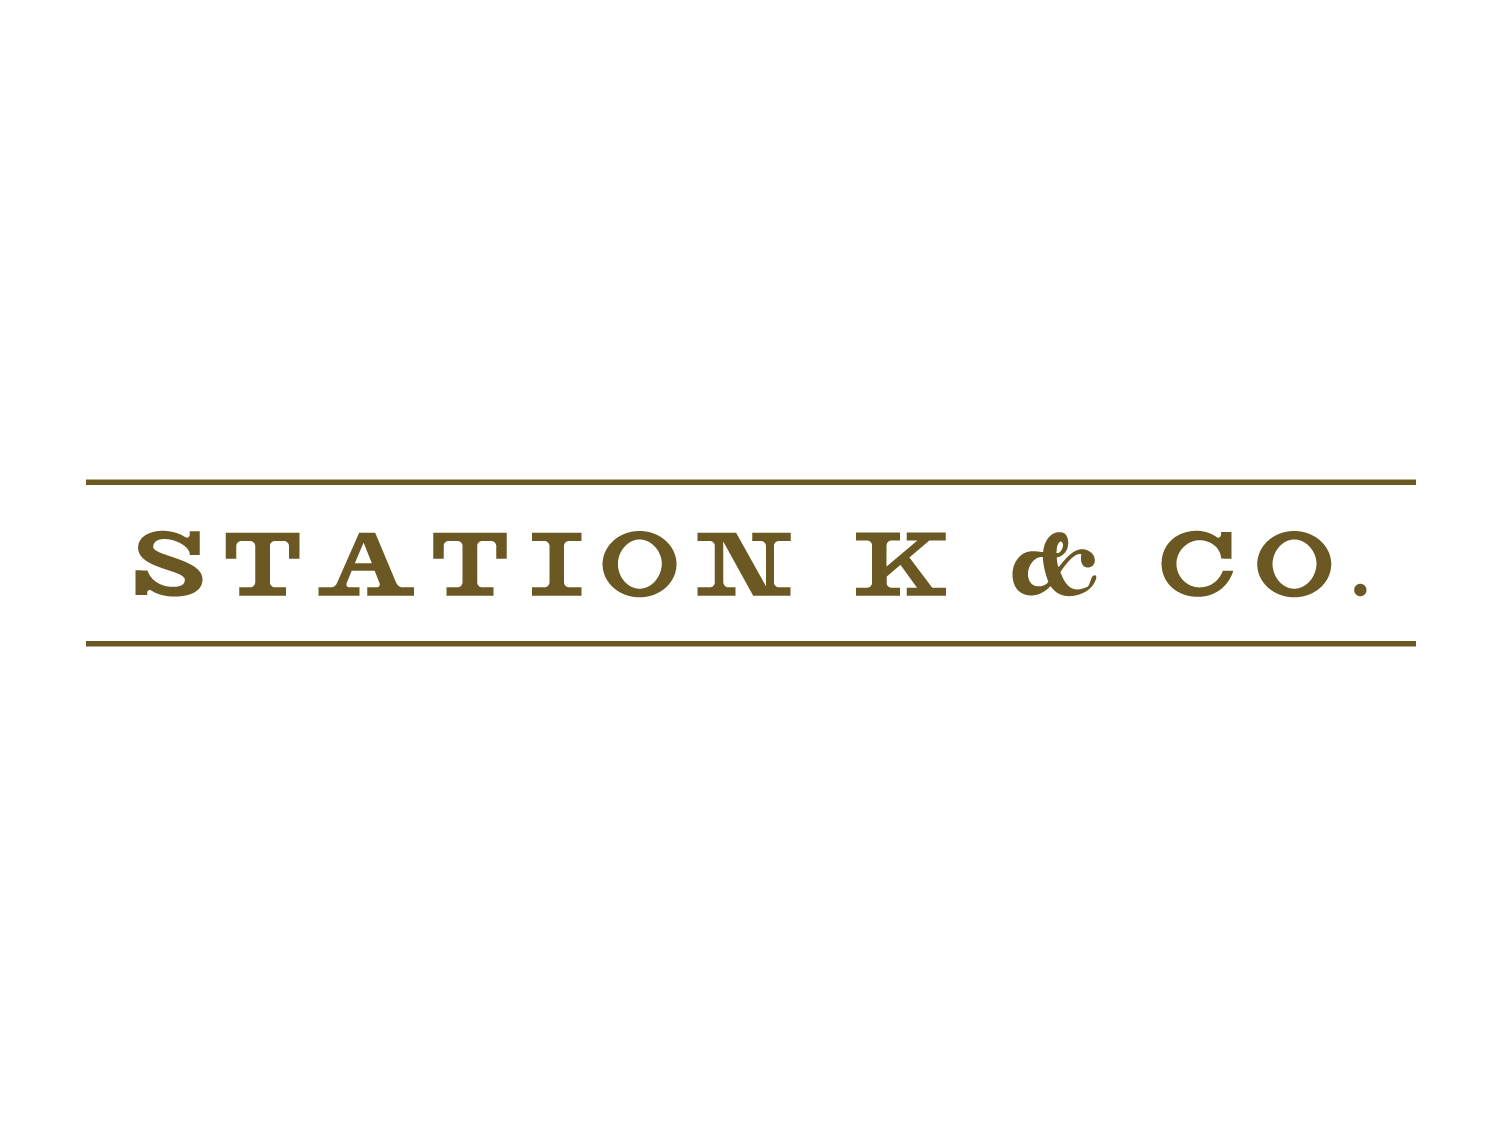 Station-K-and-Co-logo-02.jpg